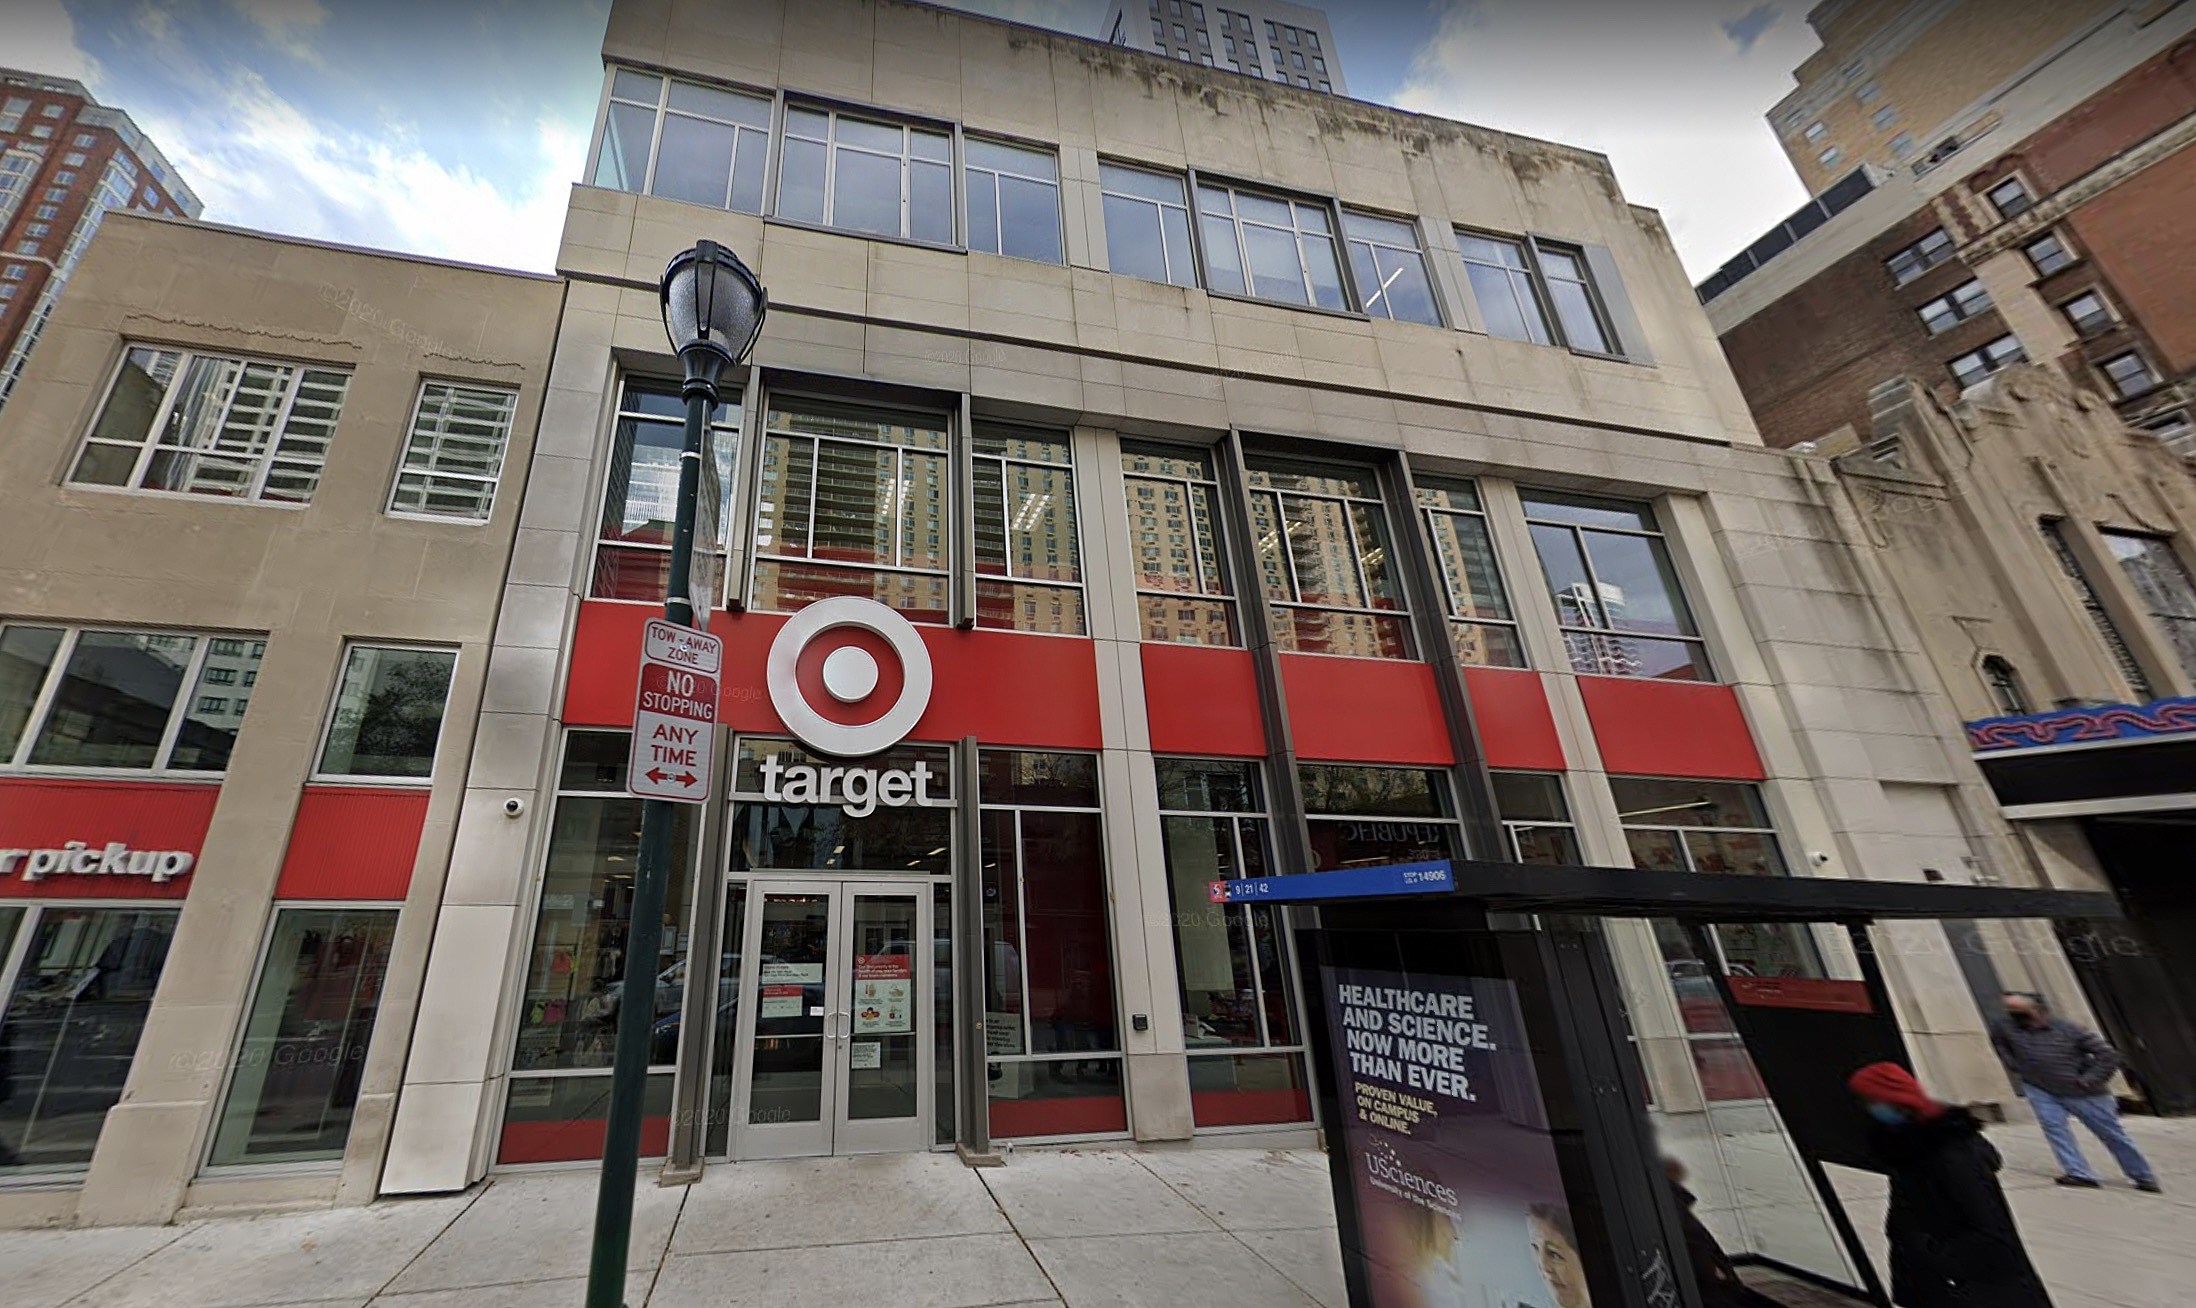 Heres A Warning For Philadelphia Target Shoppers image